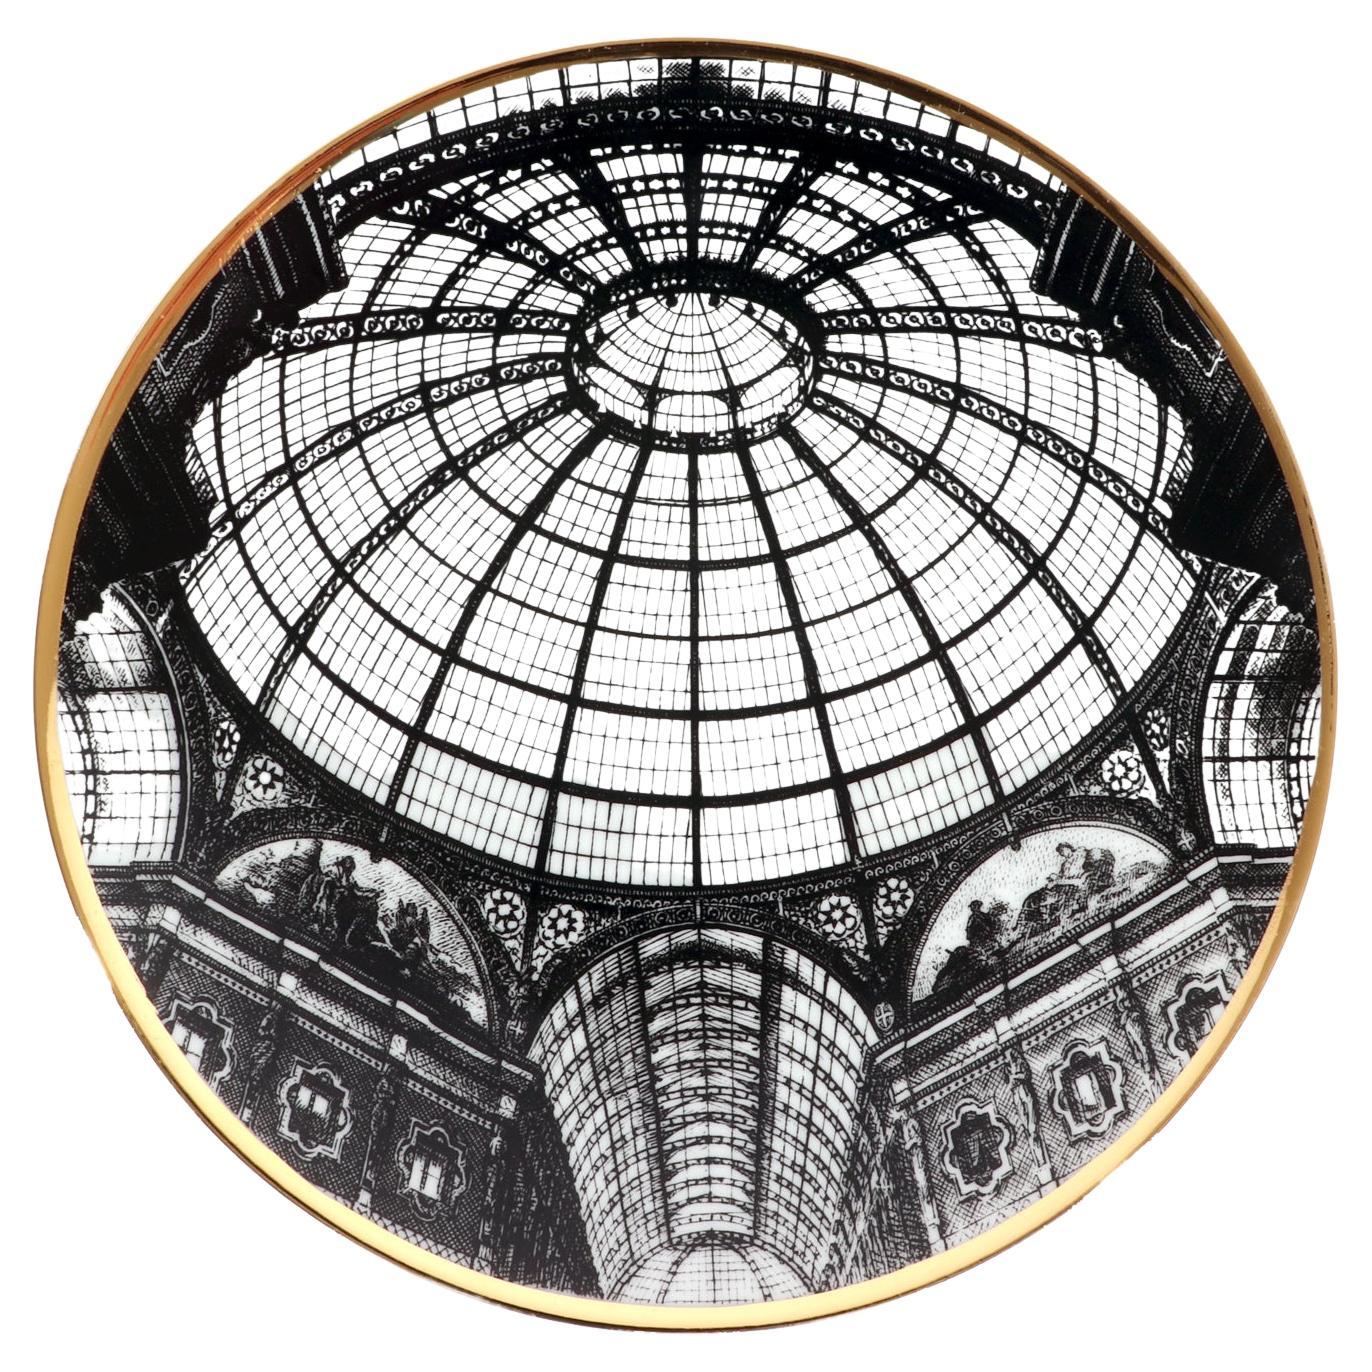 Fornasetti Dome Plate, Cupola Galleria Di Milano Numéro 7 de la série